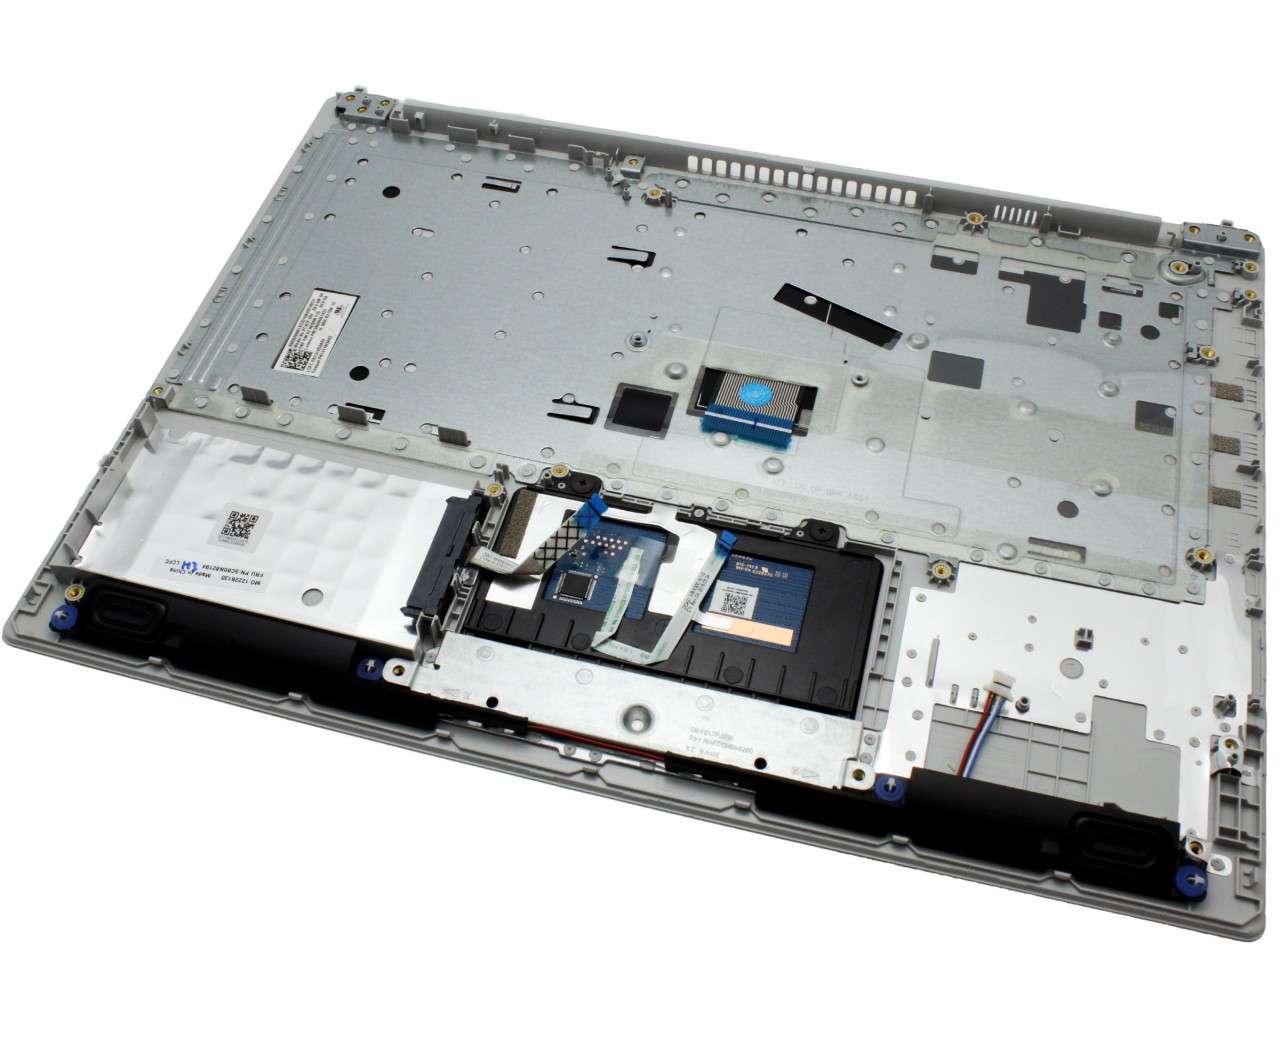 Tastatura Lenovo PK1314D2A02 Neagra cu Palmrest gri si Touchpad